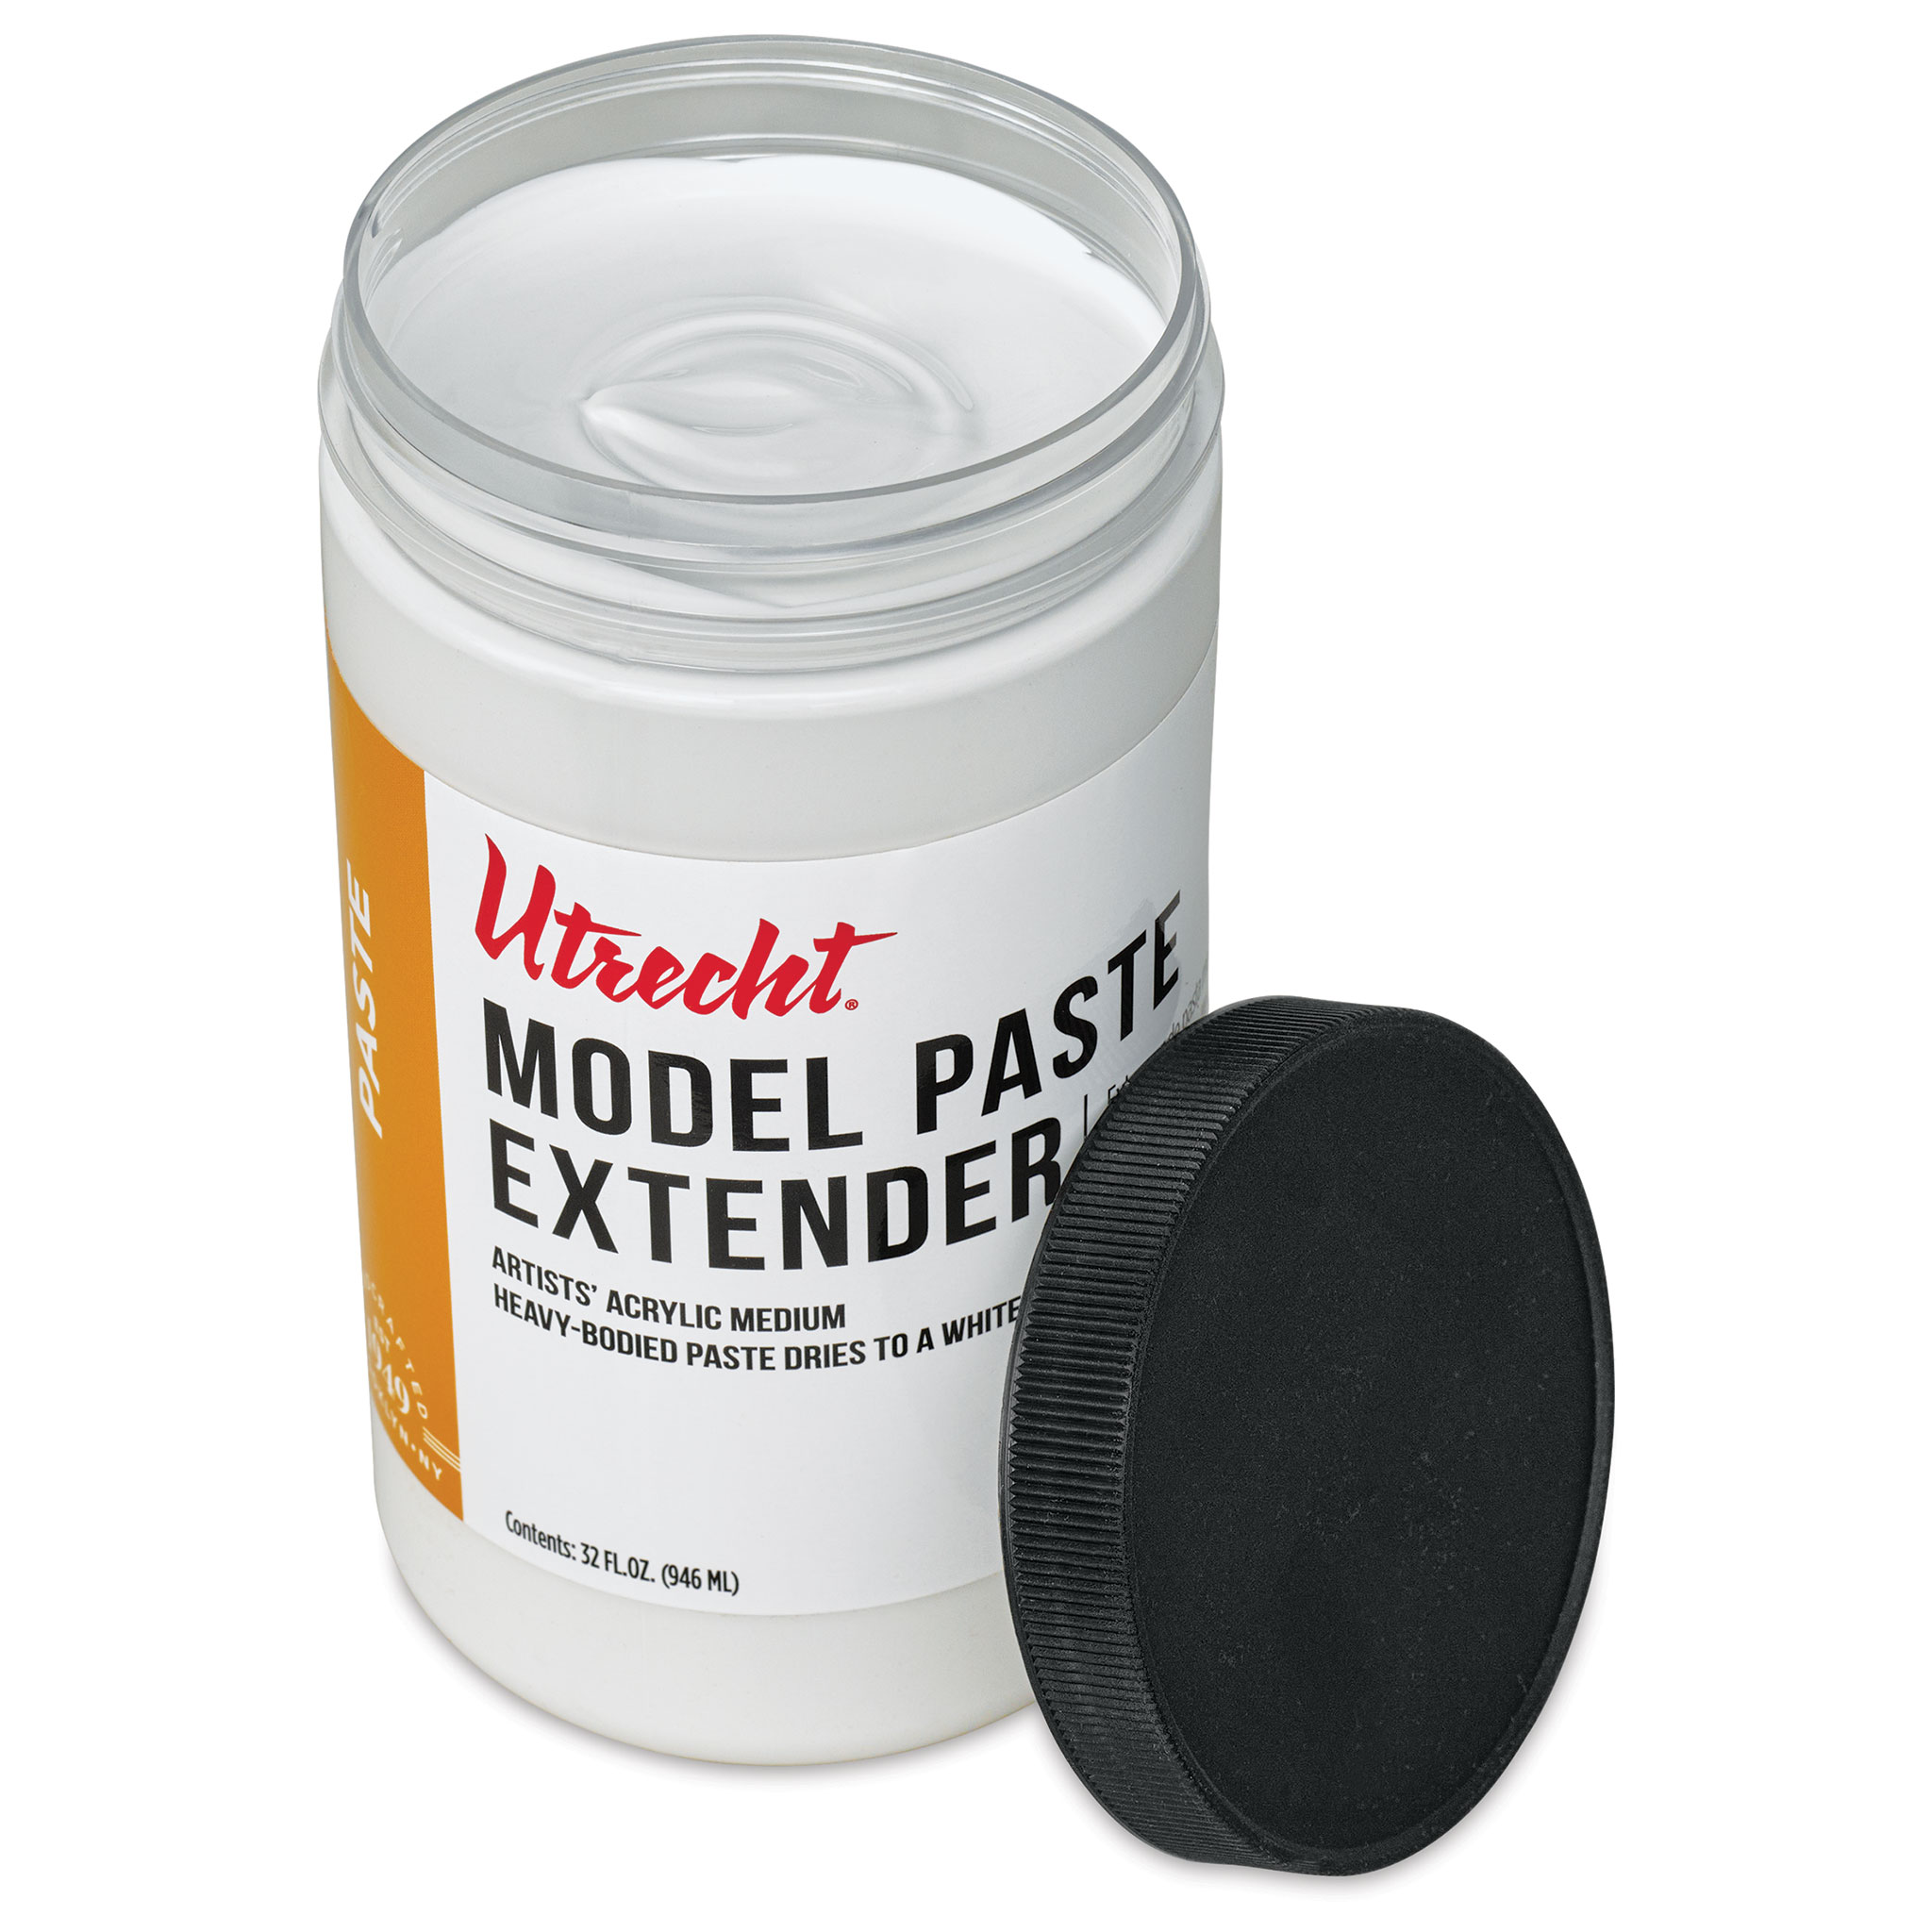 Utrecht Acrylic Medium - Modeling Paste Extender, Gallon